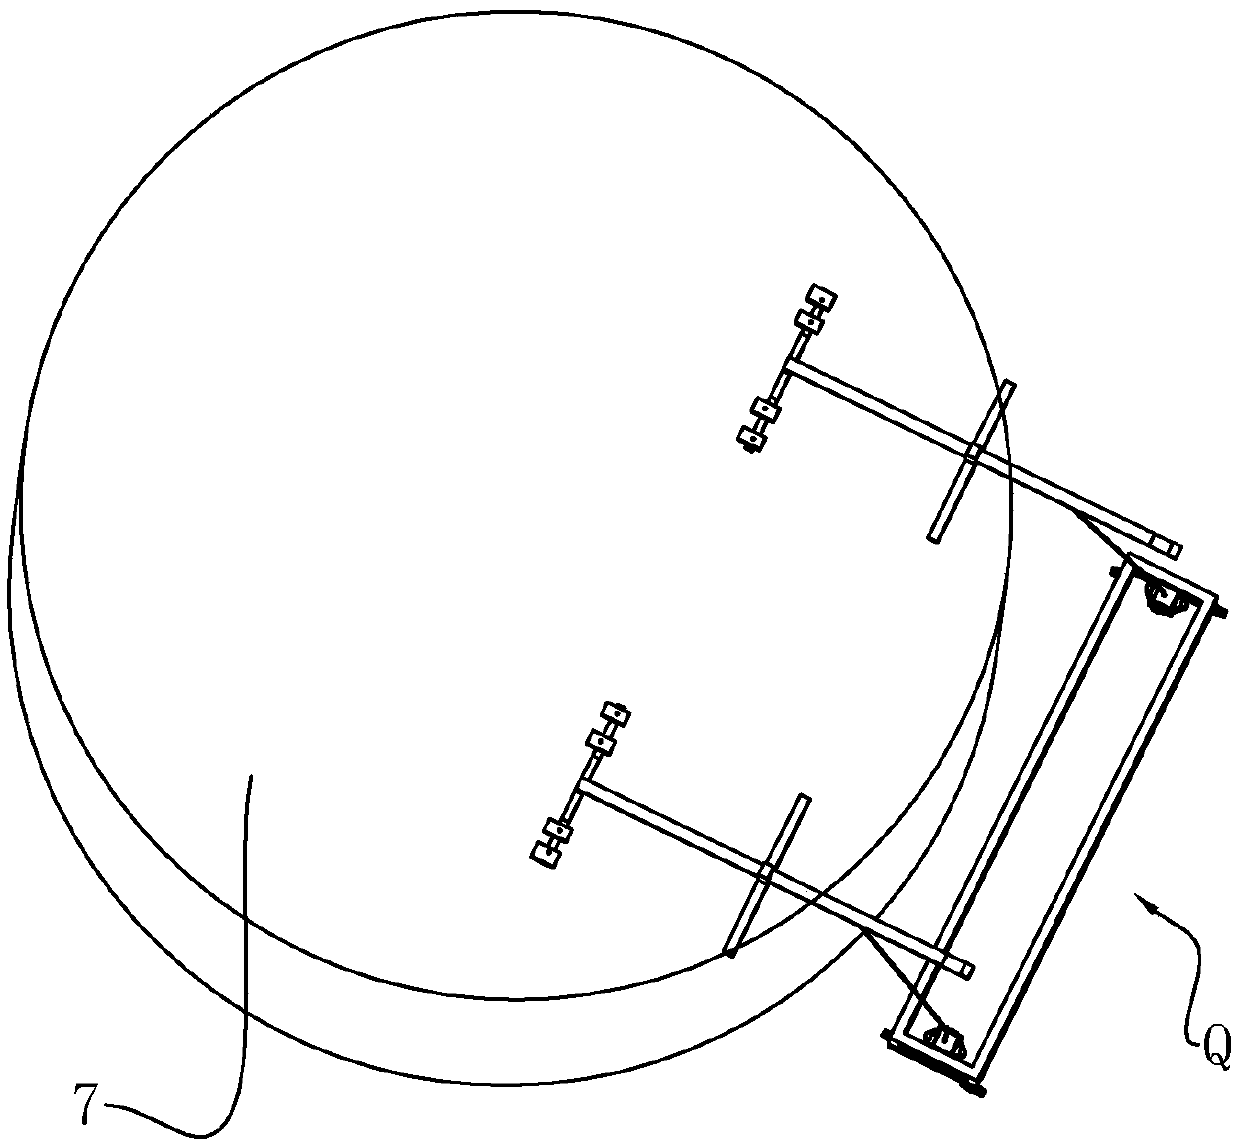 Circular-arc-shaped hanging basket and circular-ring-shaped hanging basket formed by splicing circular-arc-shaped hanging baskets